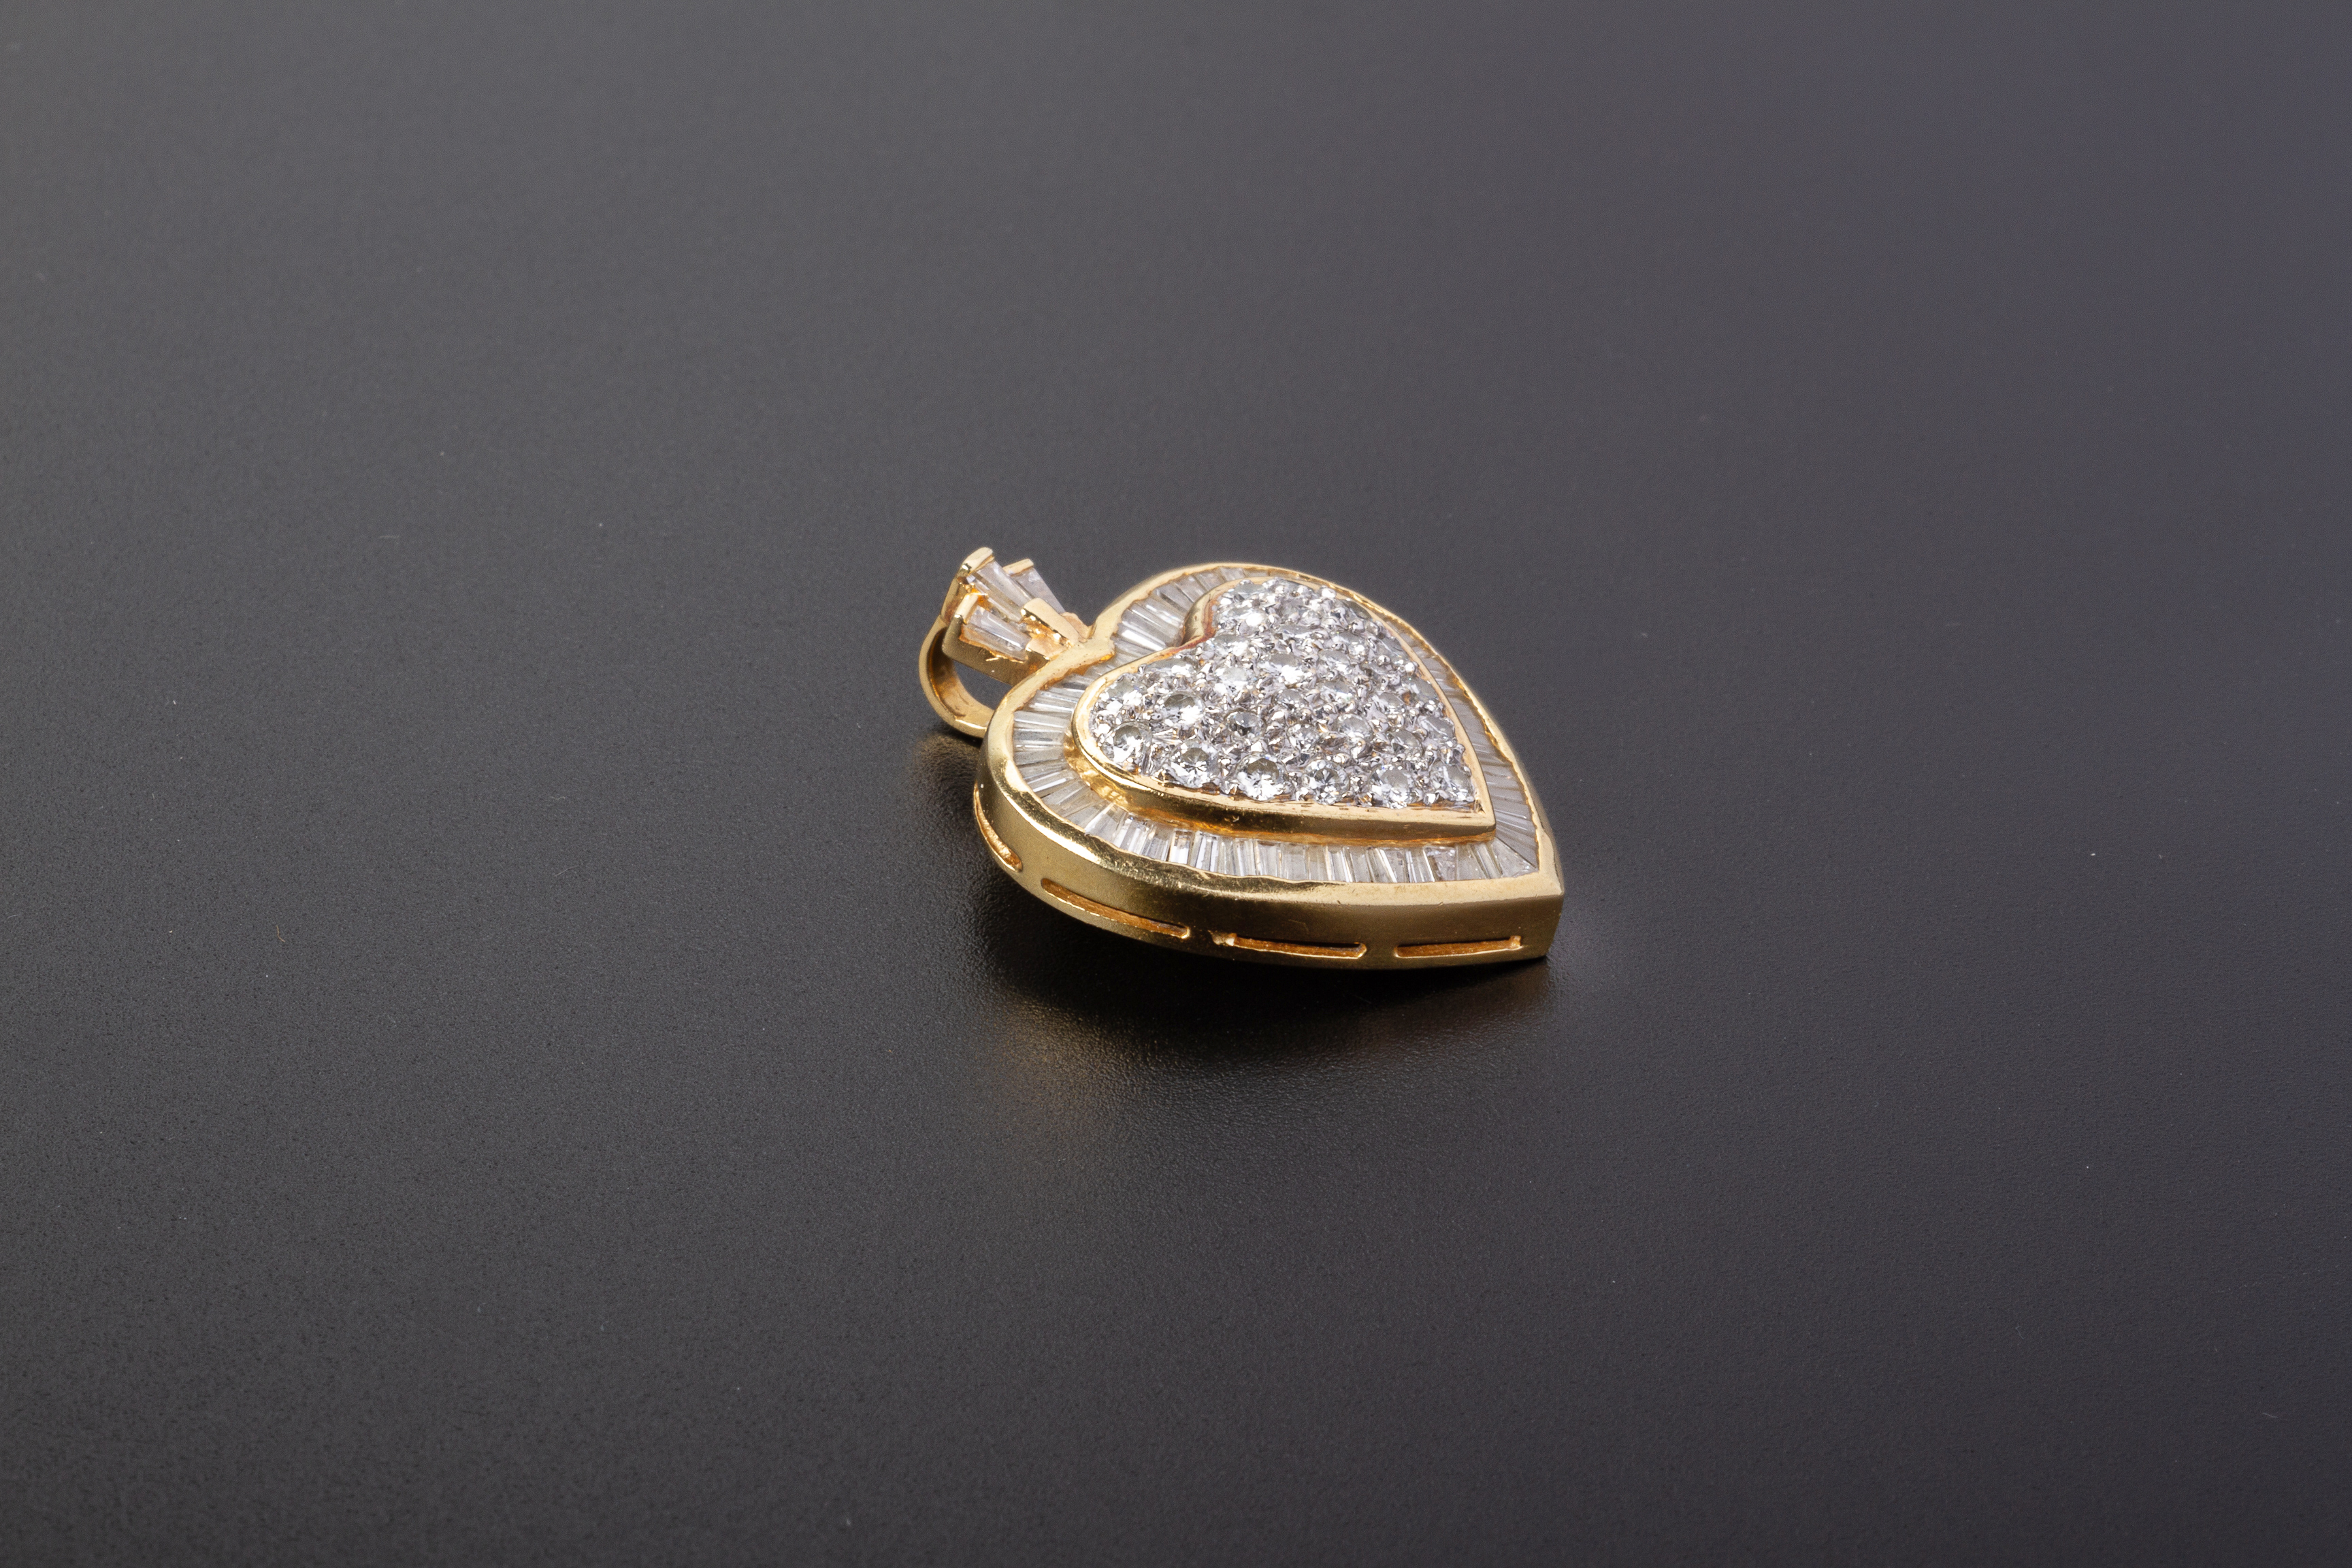 A HEART-SHAPED DIAMOND PENDANT - Image 2 of 3